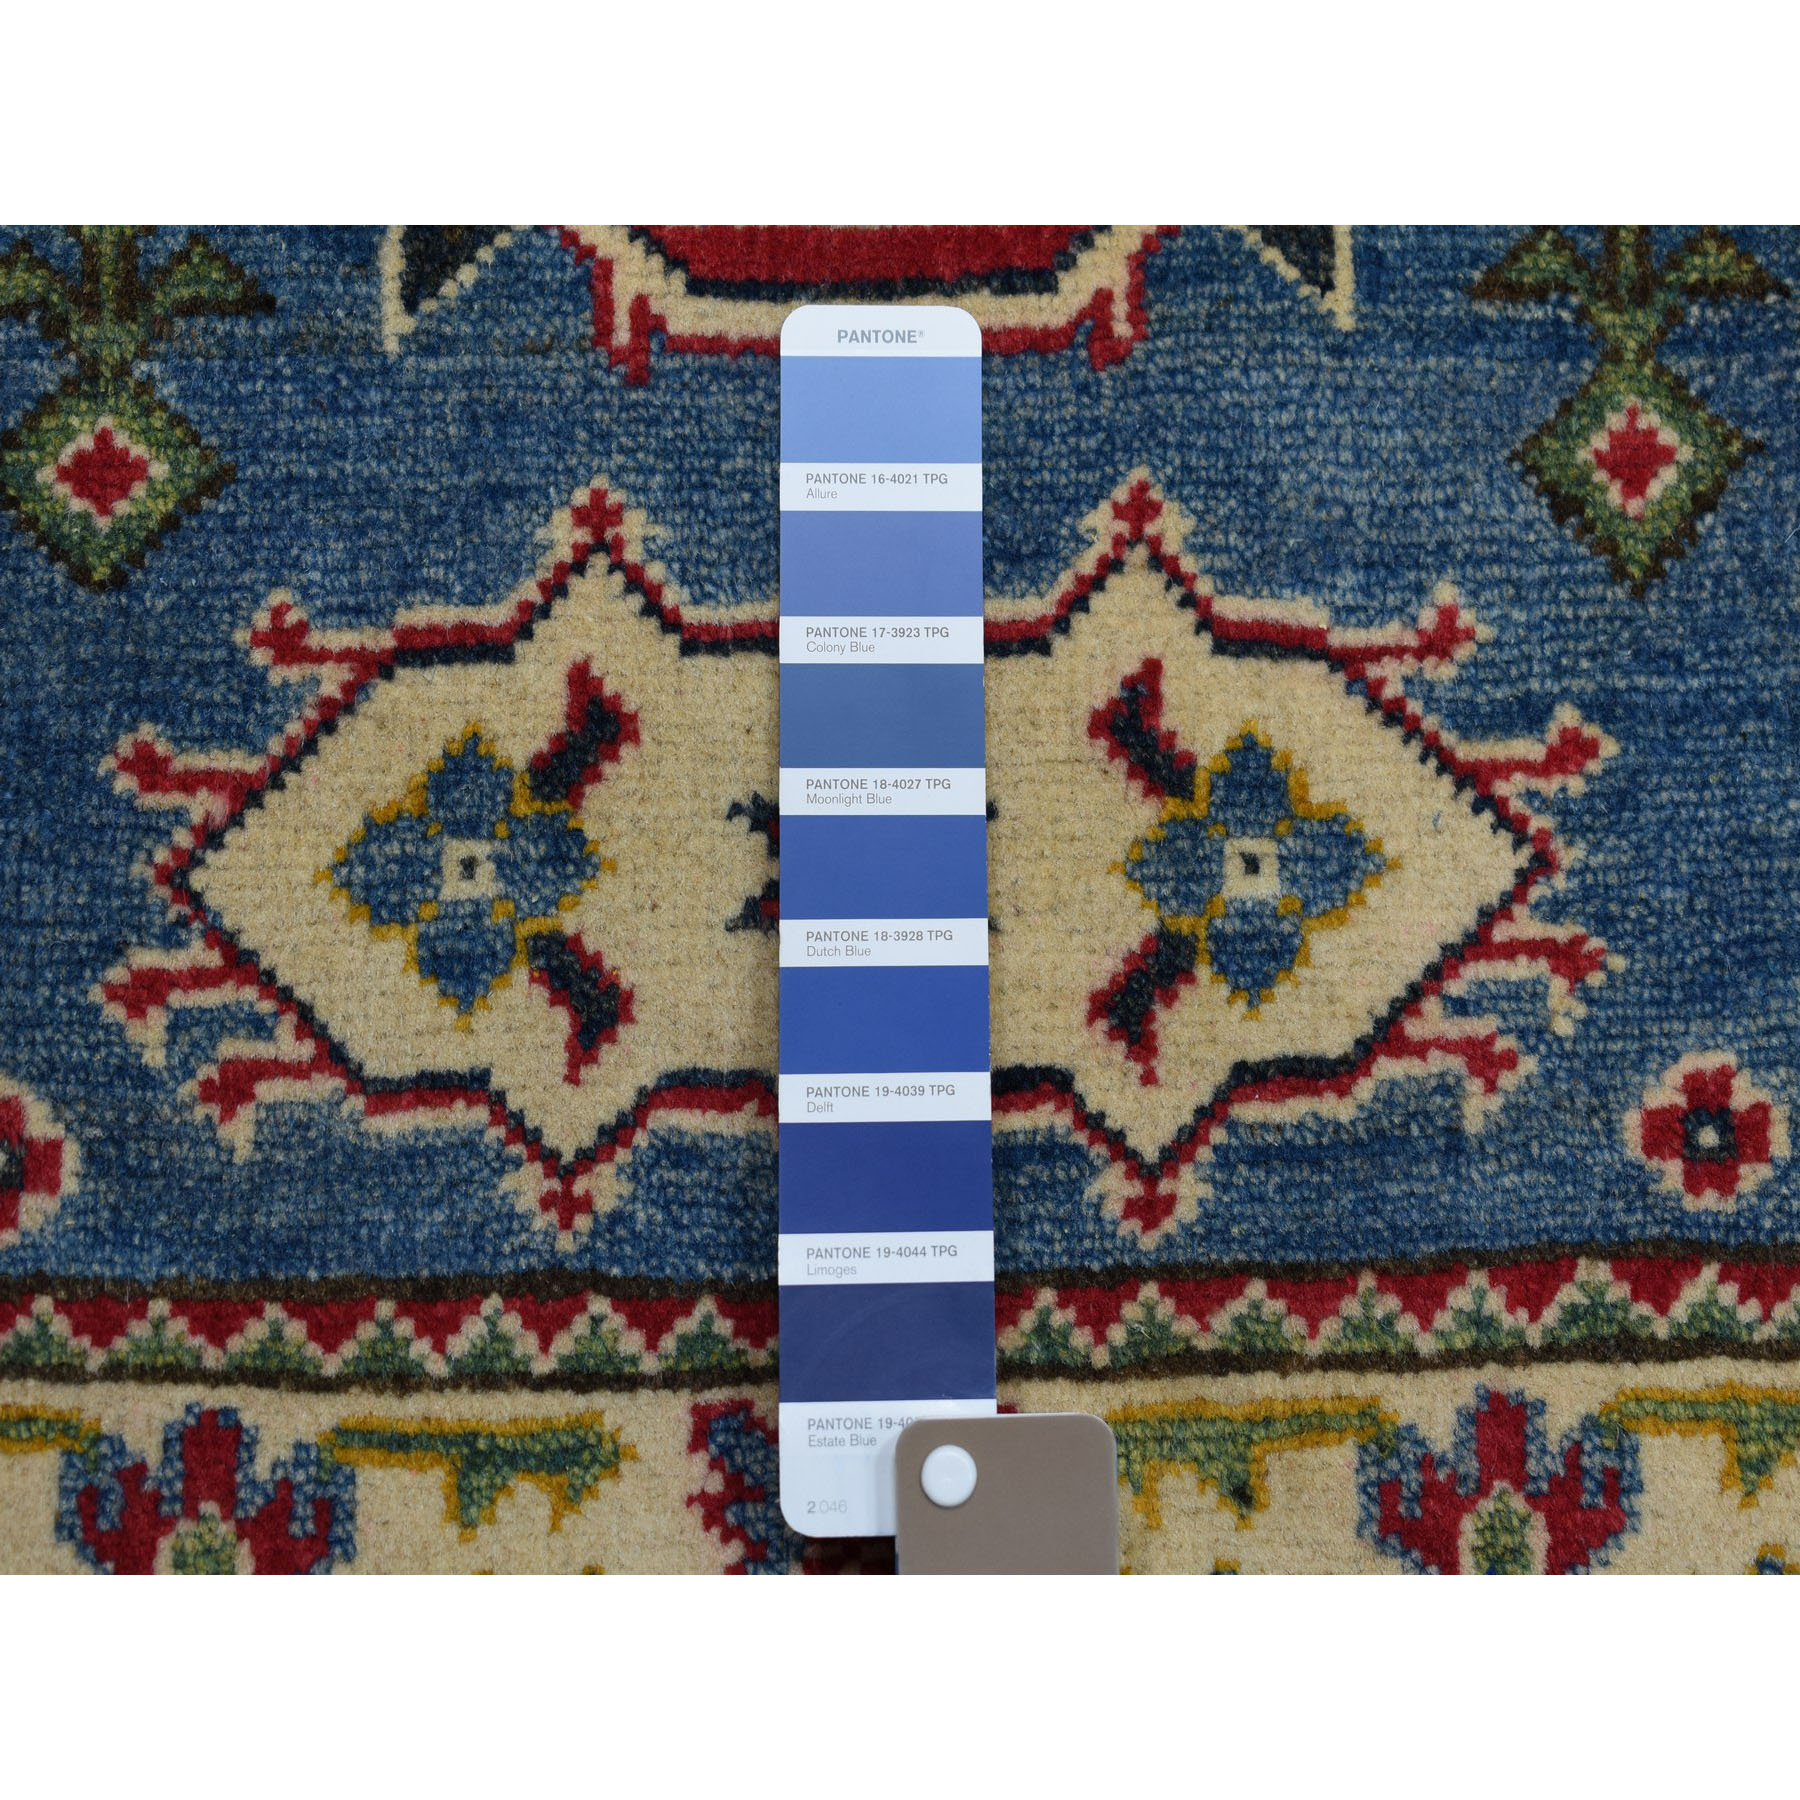 2-1 x3- Blue Geometric Design Kazak Pure Wool Hand-Knotted Oriental Rug 